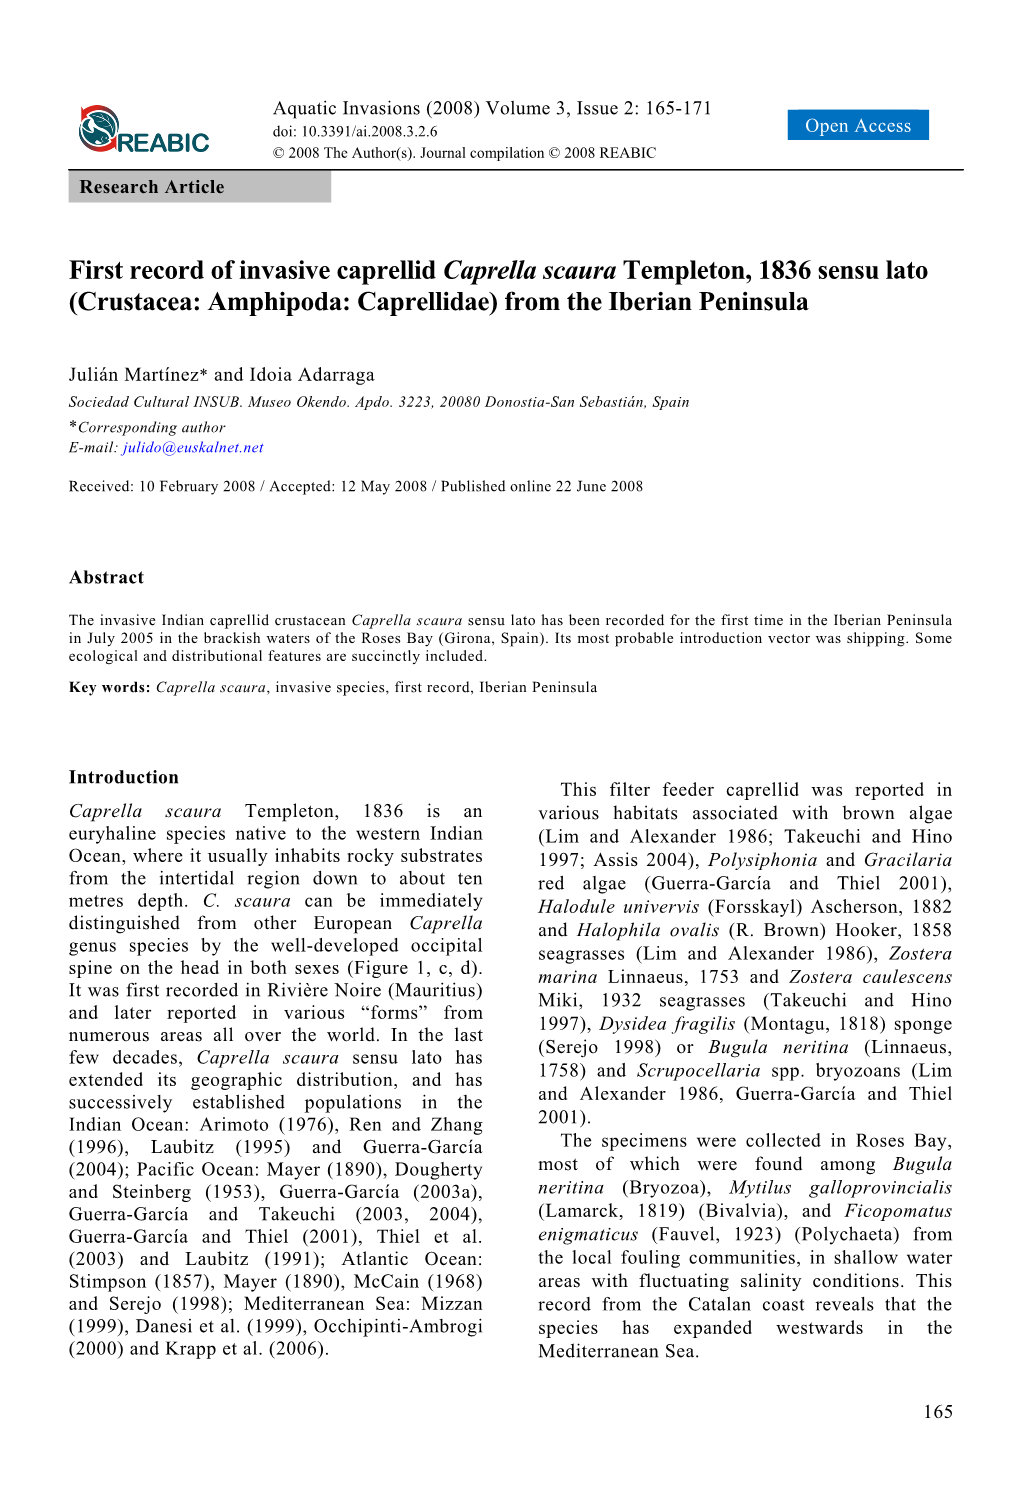 First Record of Invasive Caprellid Caprella Scaura Templeton, 1836 Sensu Lato (Crustacea: Amphipoda: Caprellidae) from the Iberian Peninsula